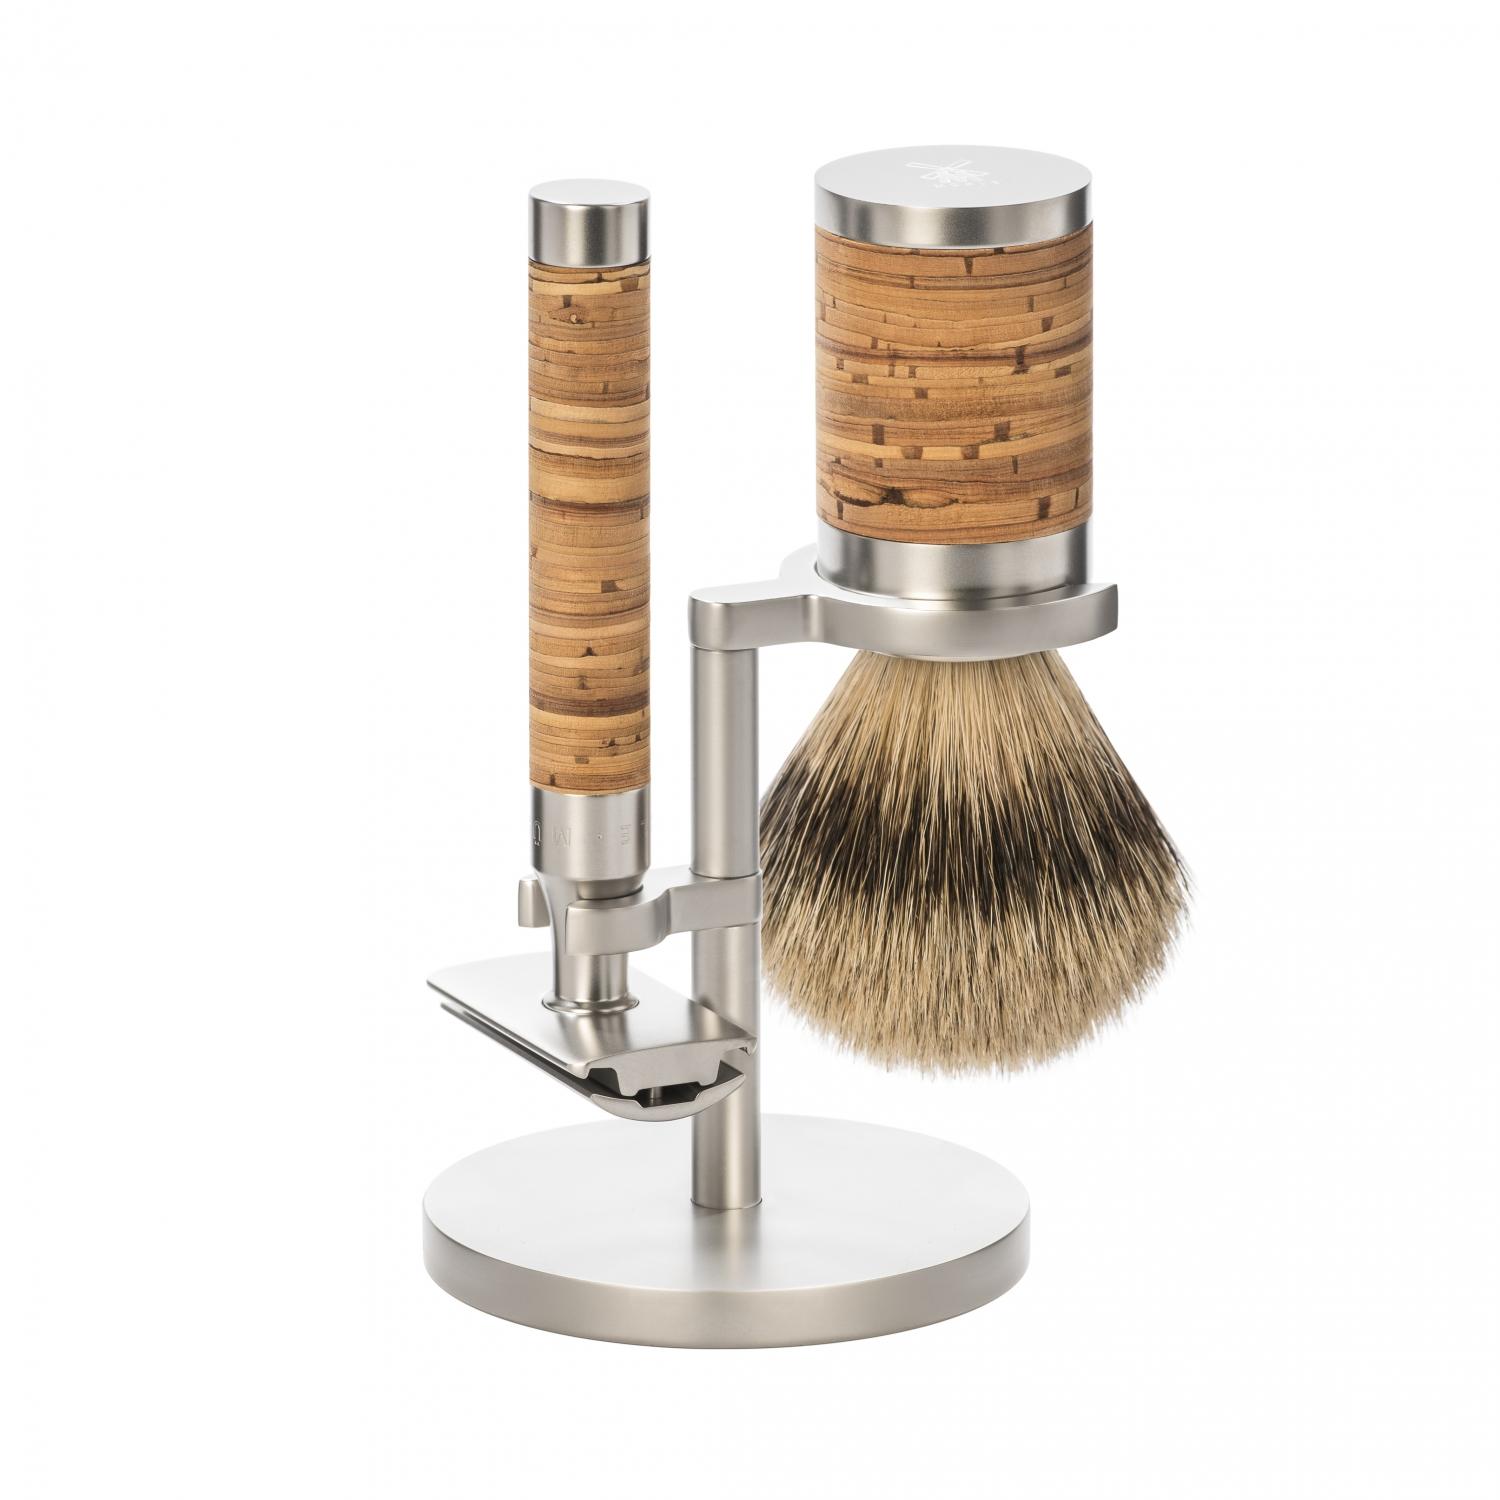 MÜHLE silvertip badger 3 piece shaving set in stainless steel and birch bark